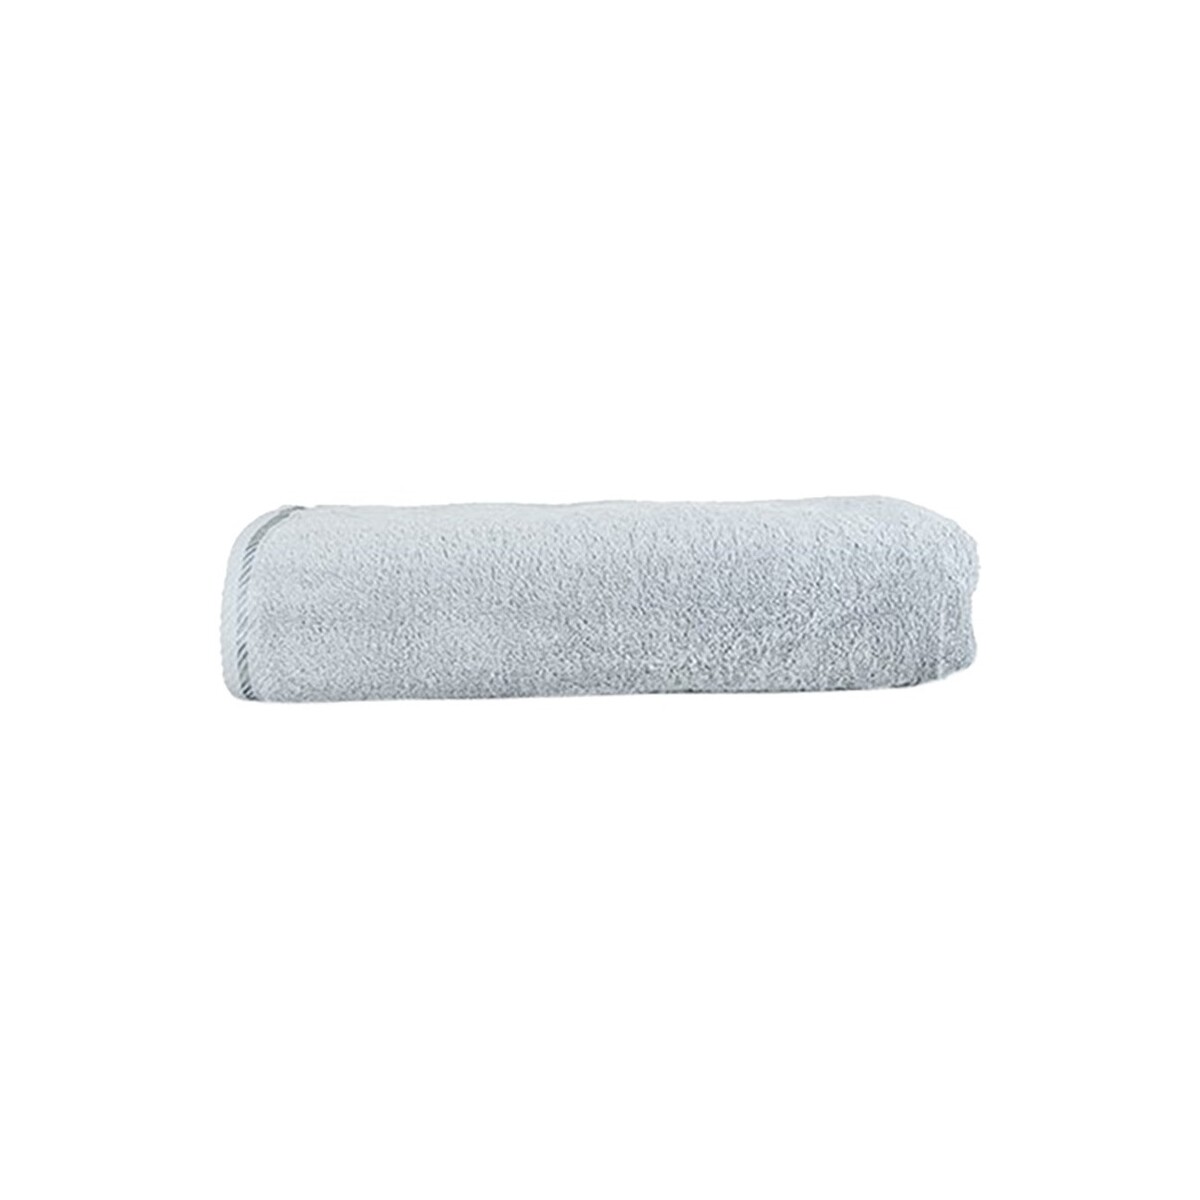 Casa Toalla y manopla de toalla A&r Towels RW6536 Gris